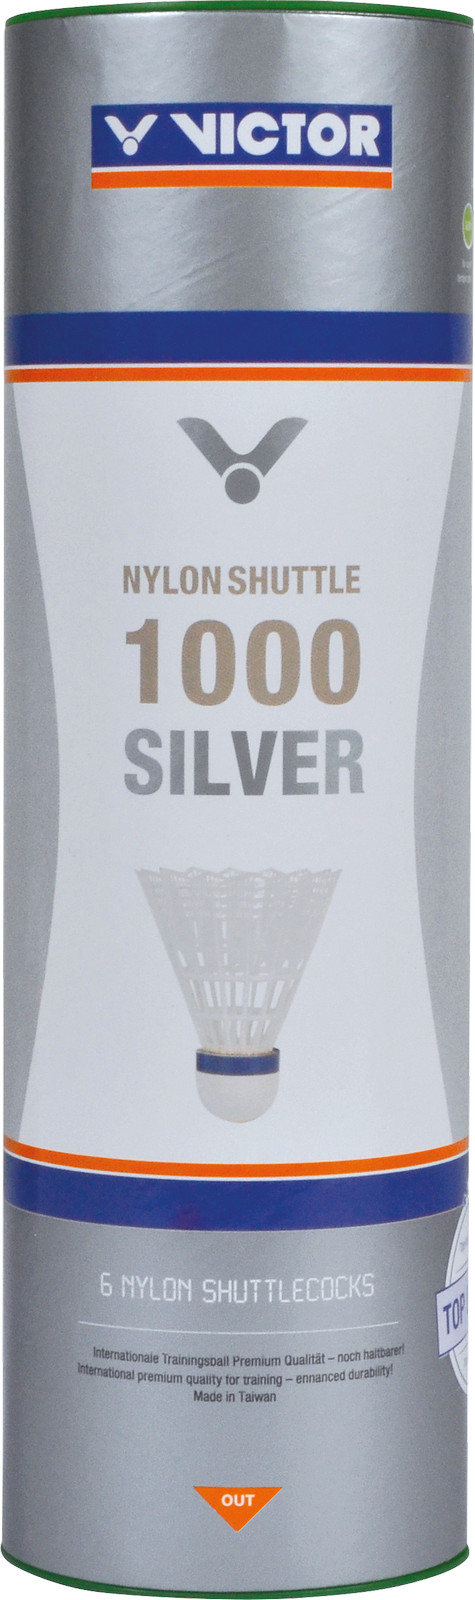 Victor Badmintonbälle Nylon Shuttle 1000 Silver